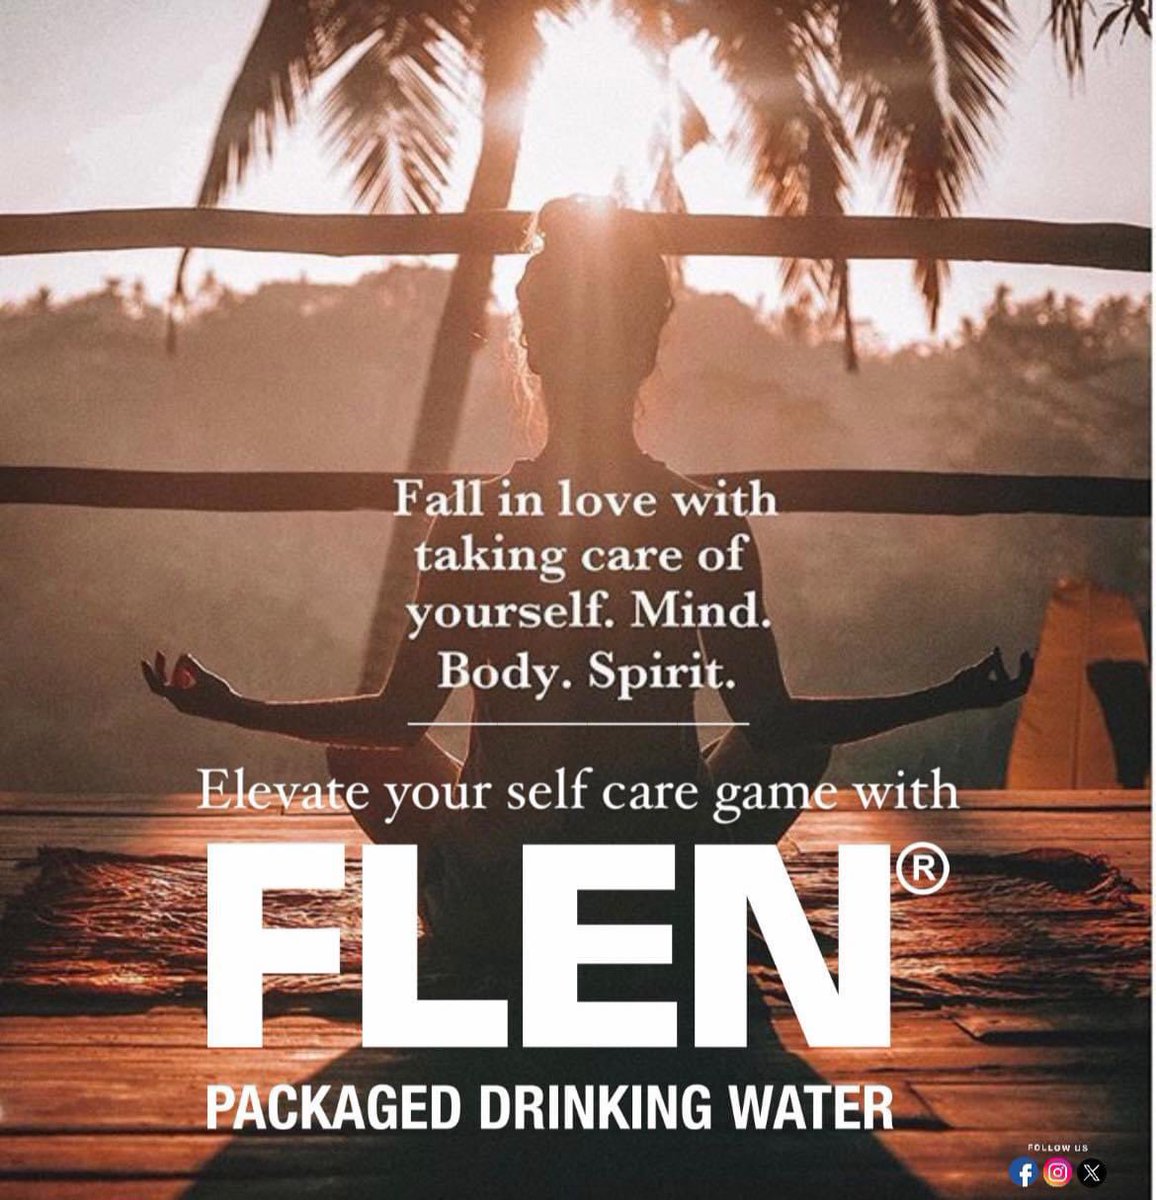 Elevate your self care game with FLEN water 
.
.
.
#hindustanunited #flen #flenwater #premiumbrand #PremiumQuality #FMCG #essential #hydratewithflen #SmartPickup #smartchoice #GametimeHydration #yogatime  #travelpartner #gympartner #glowwithflen #shinefinity #No1choice